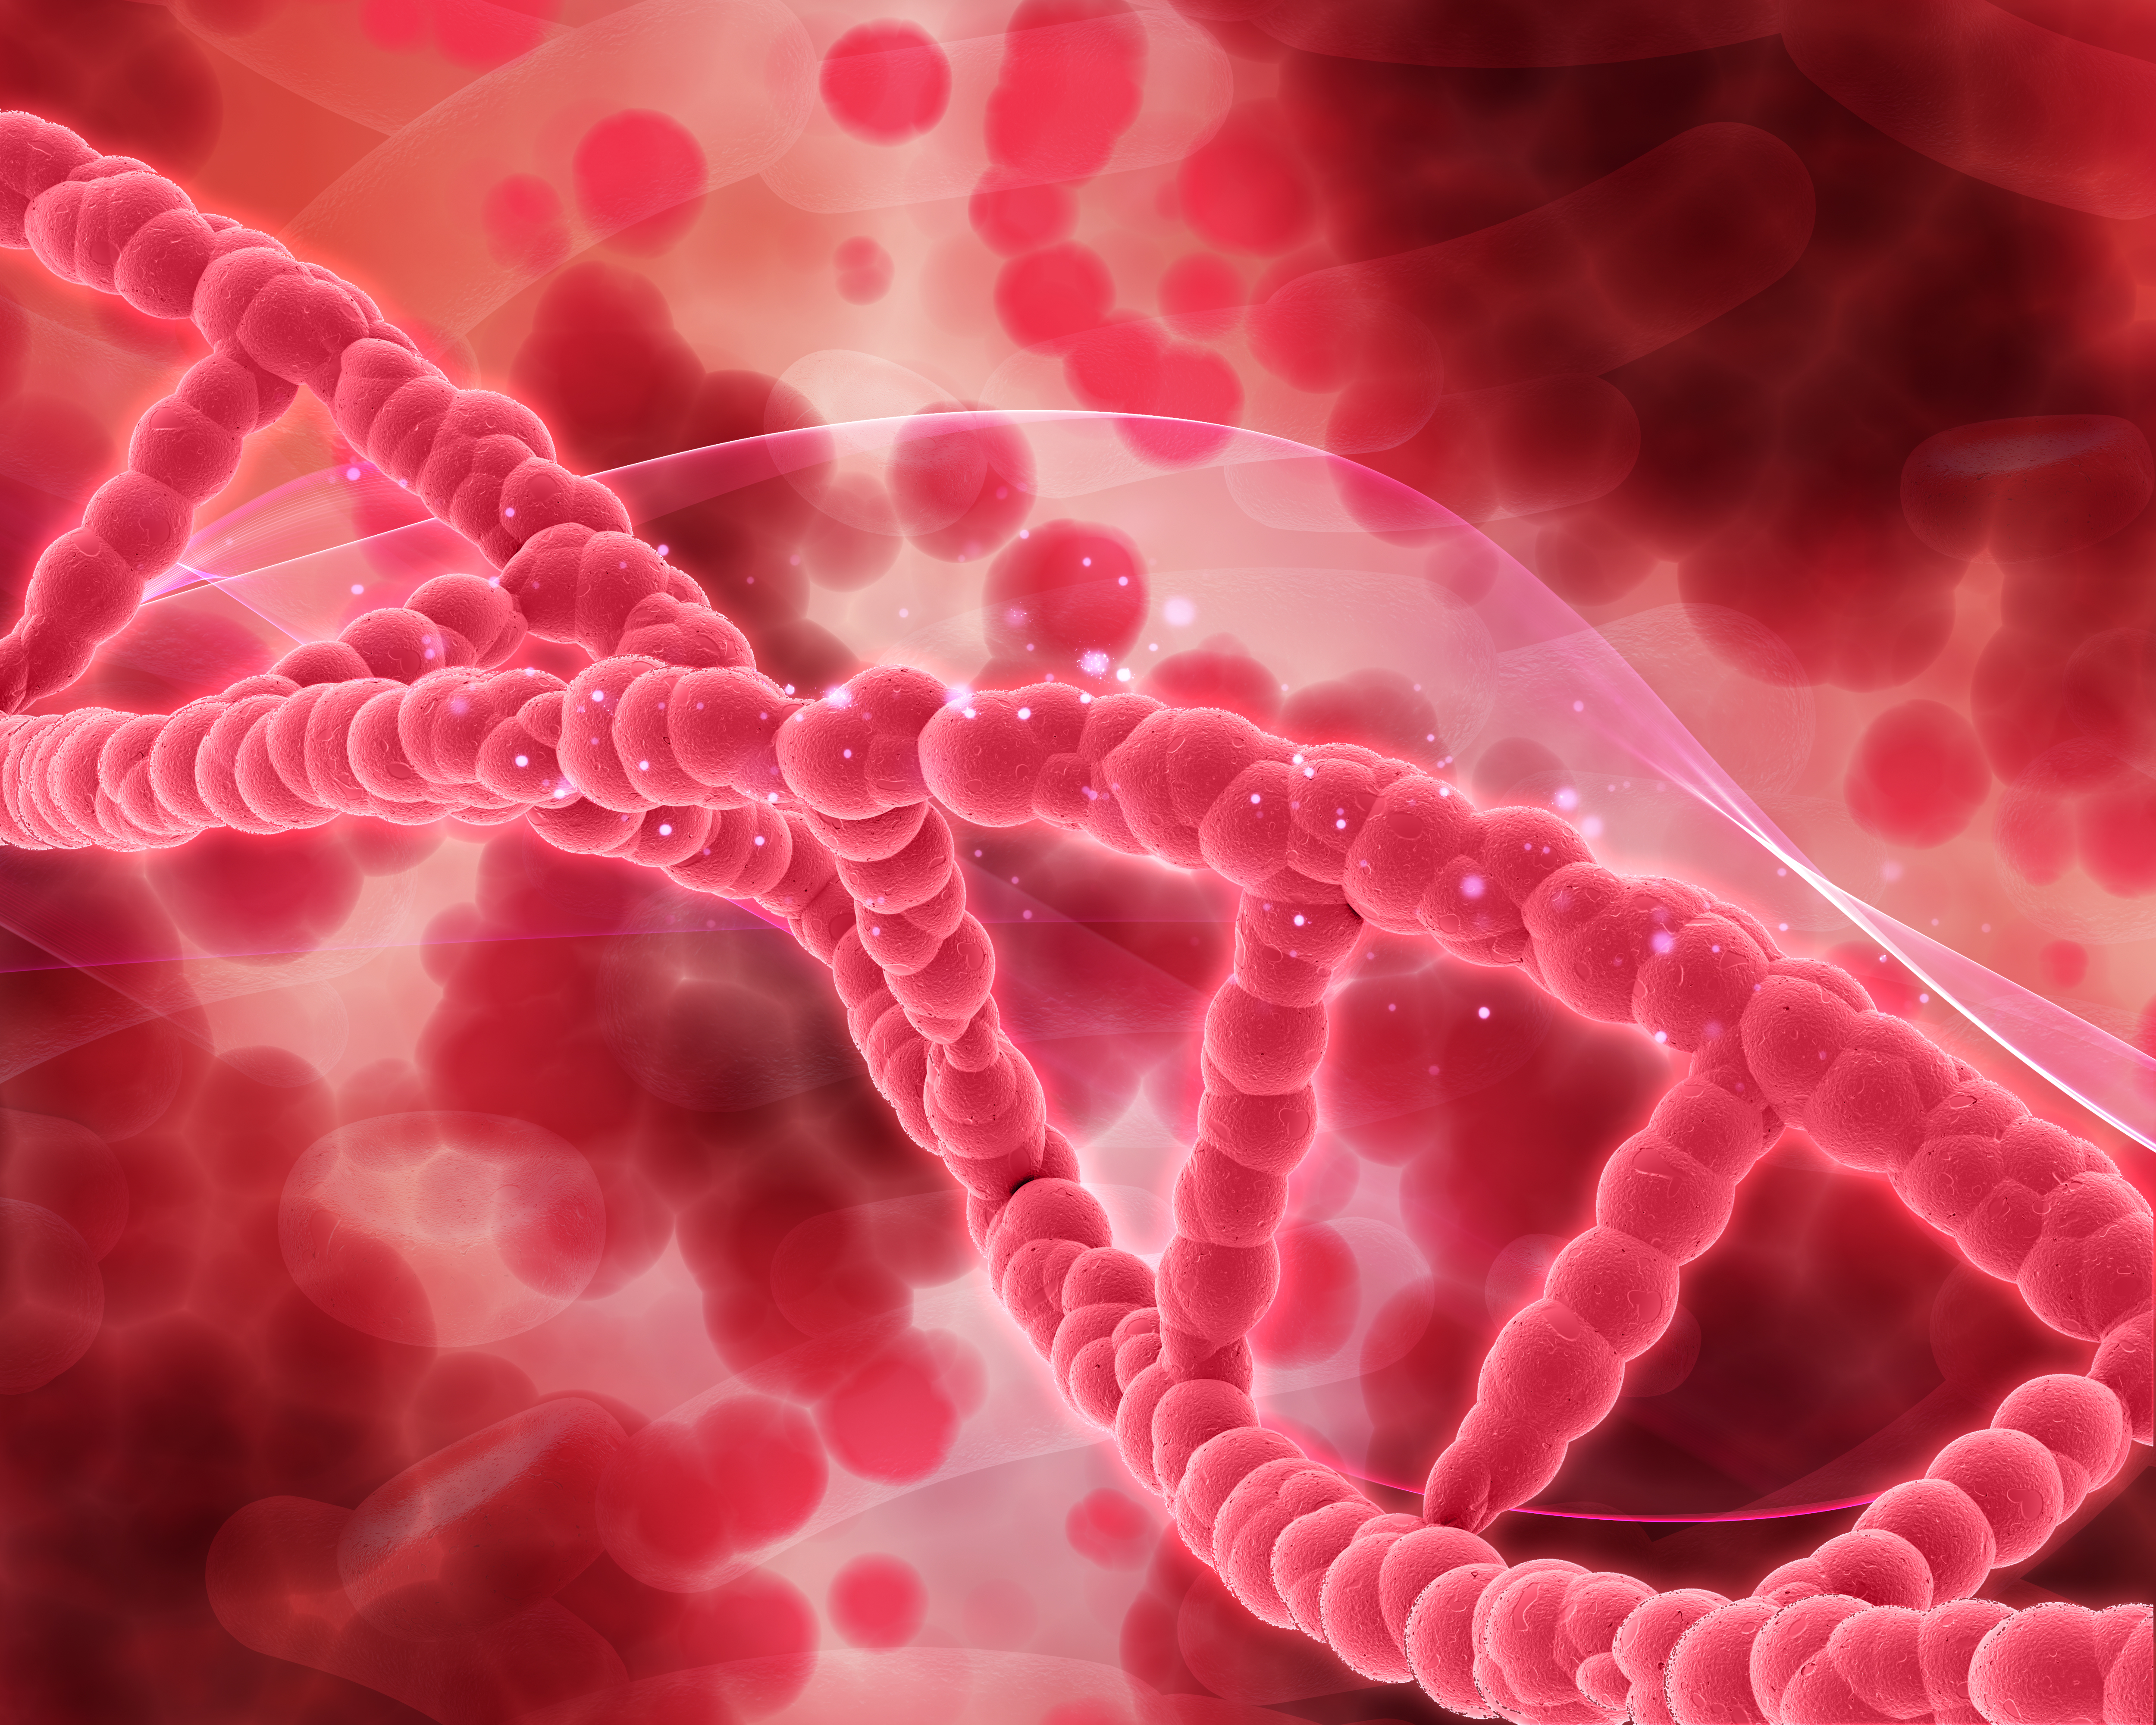 3D Medical background with DNA strands